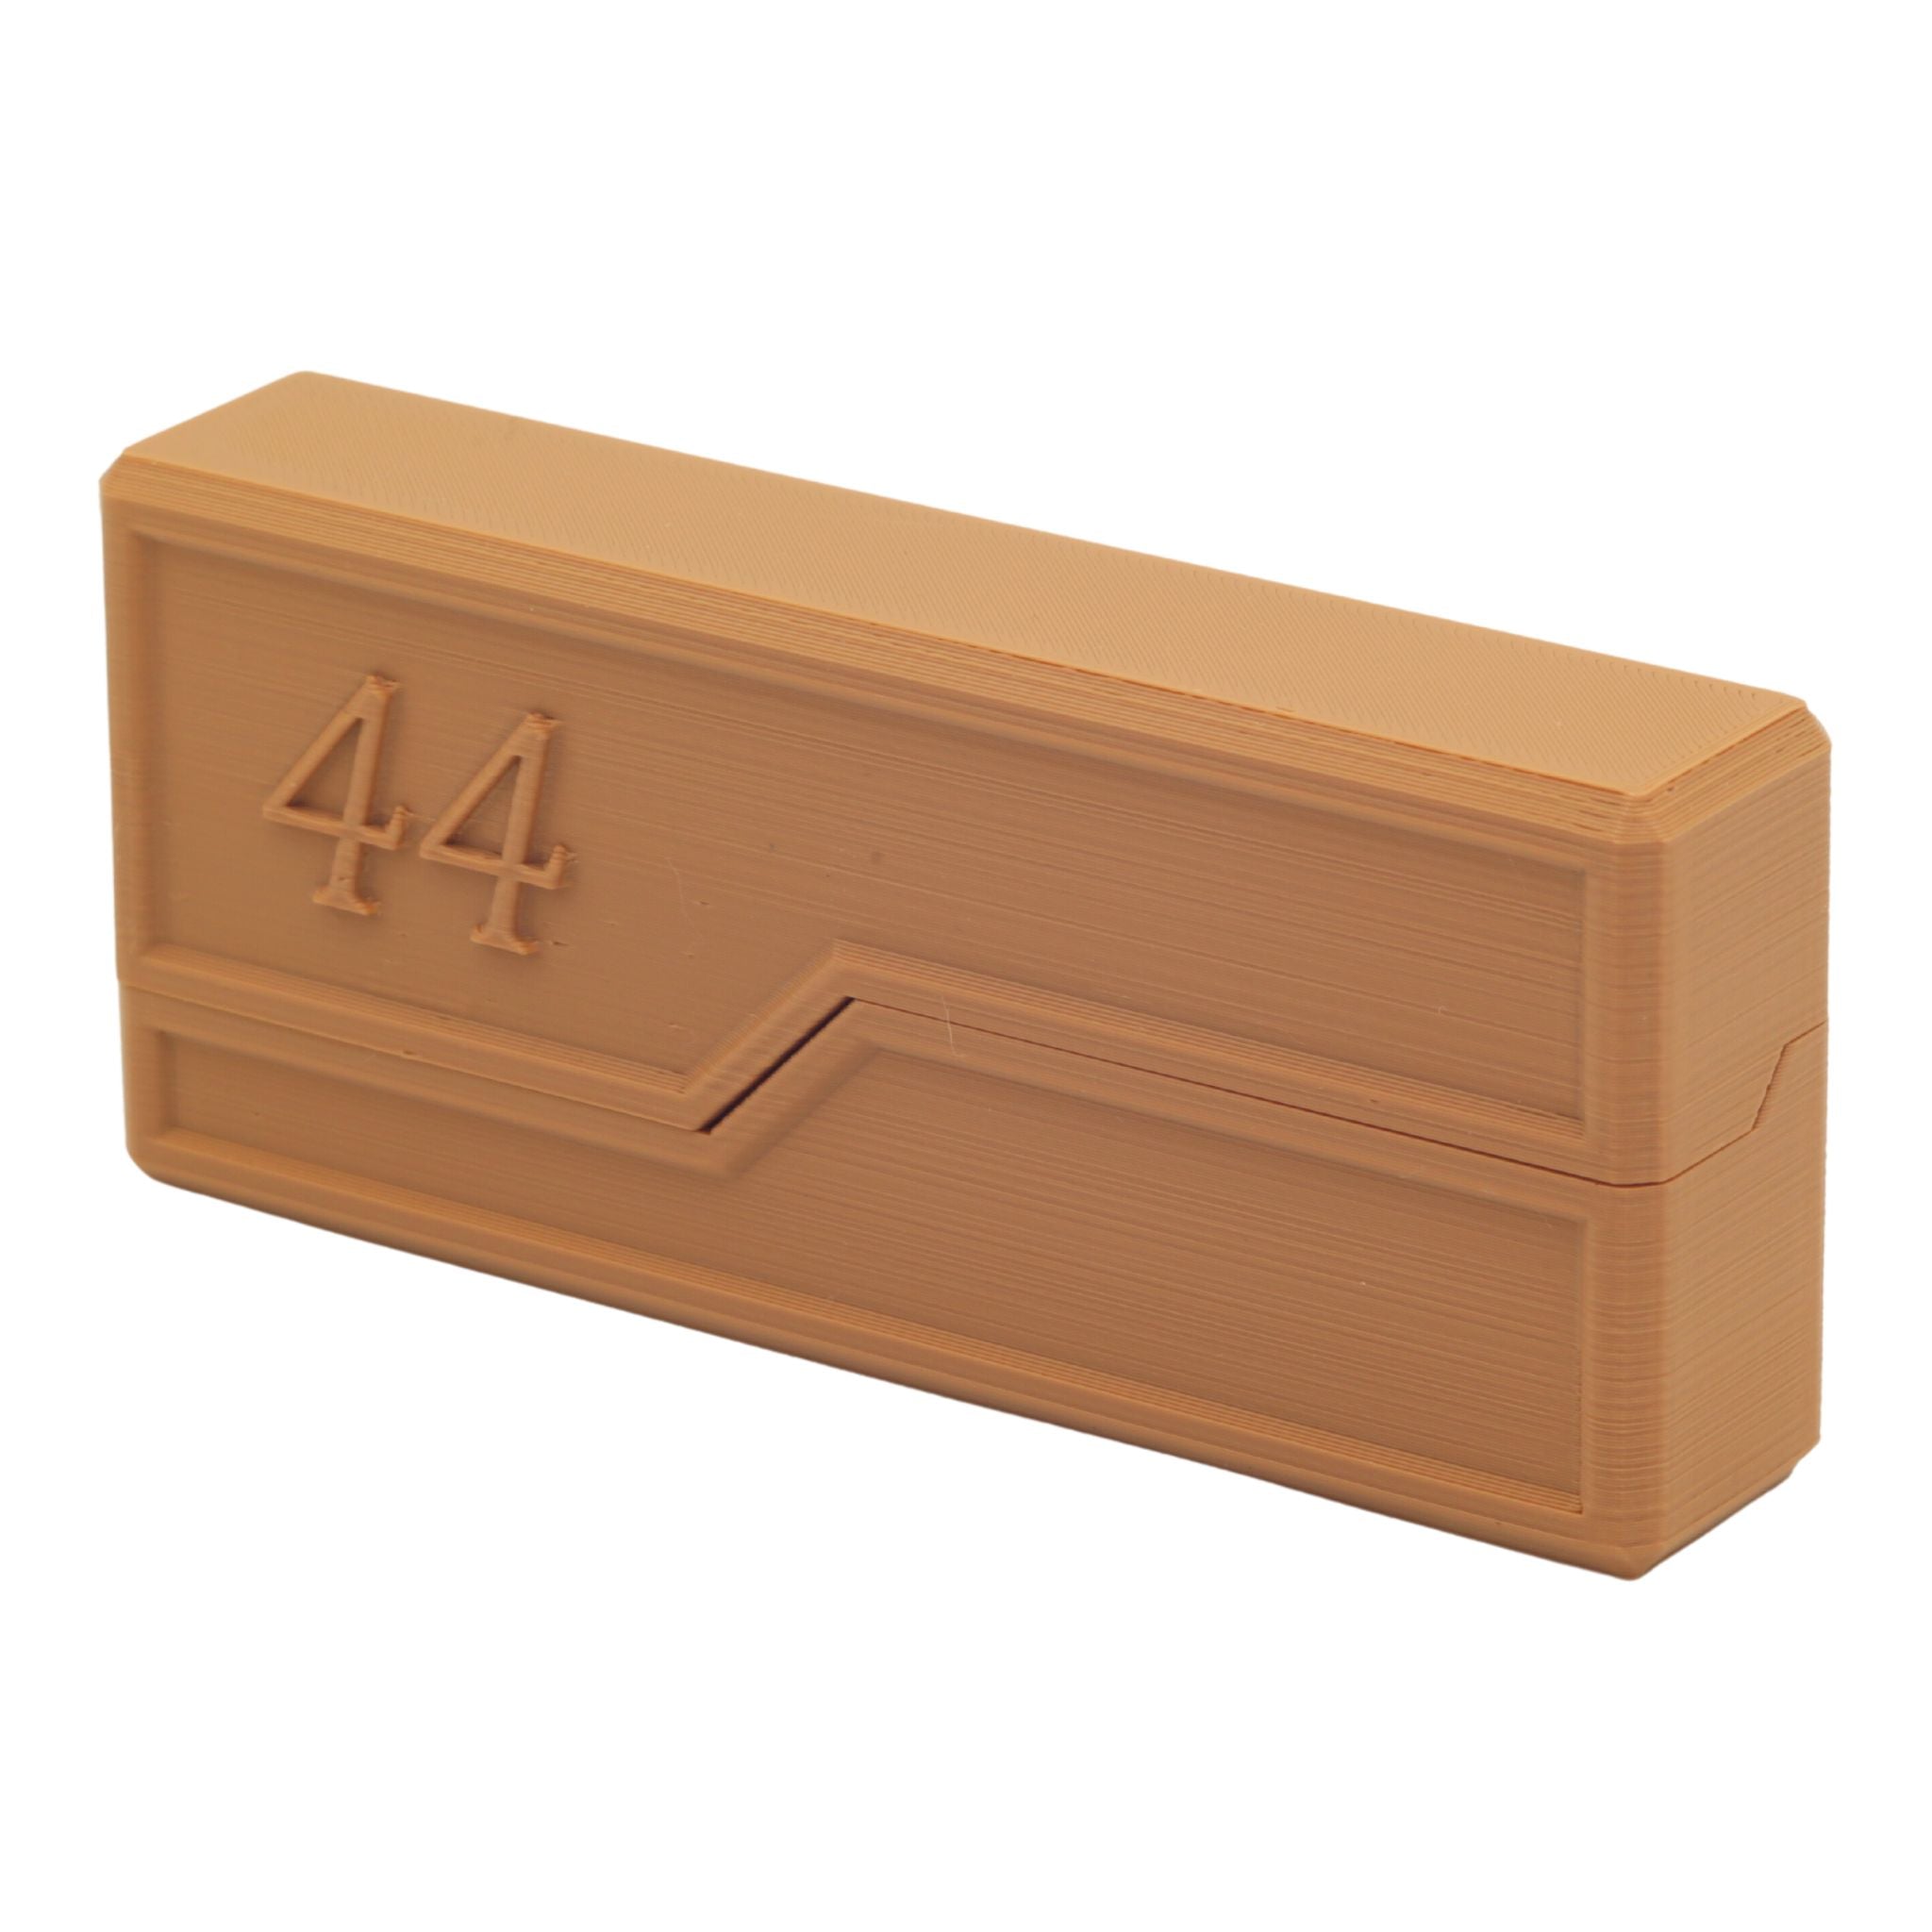 44 cal. Paper Cartridge Wallet Hinged Top